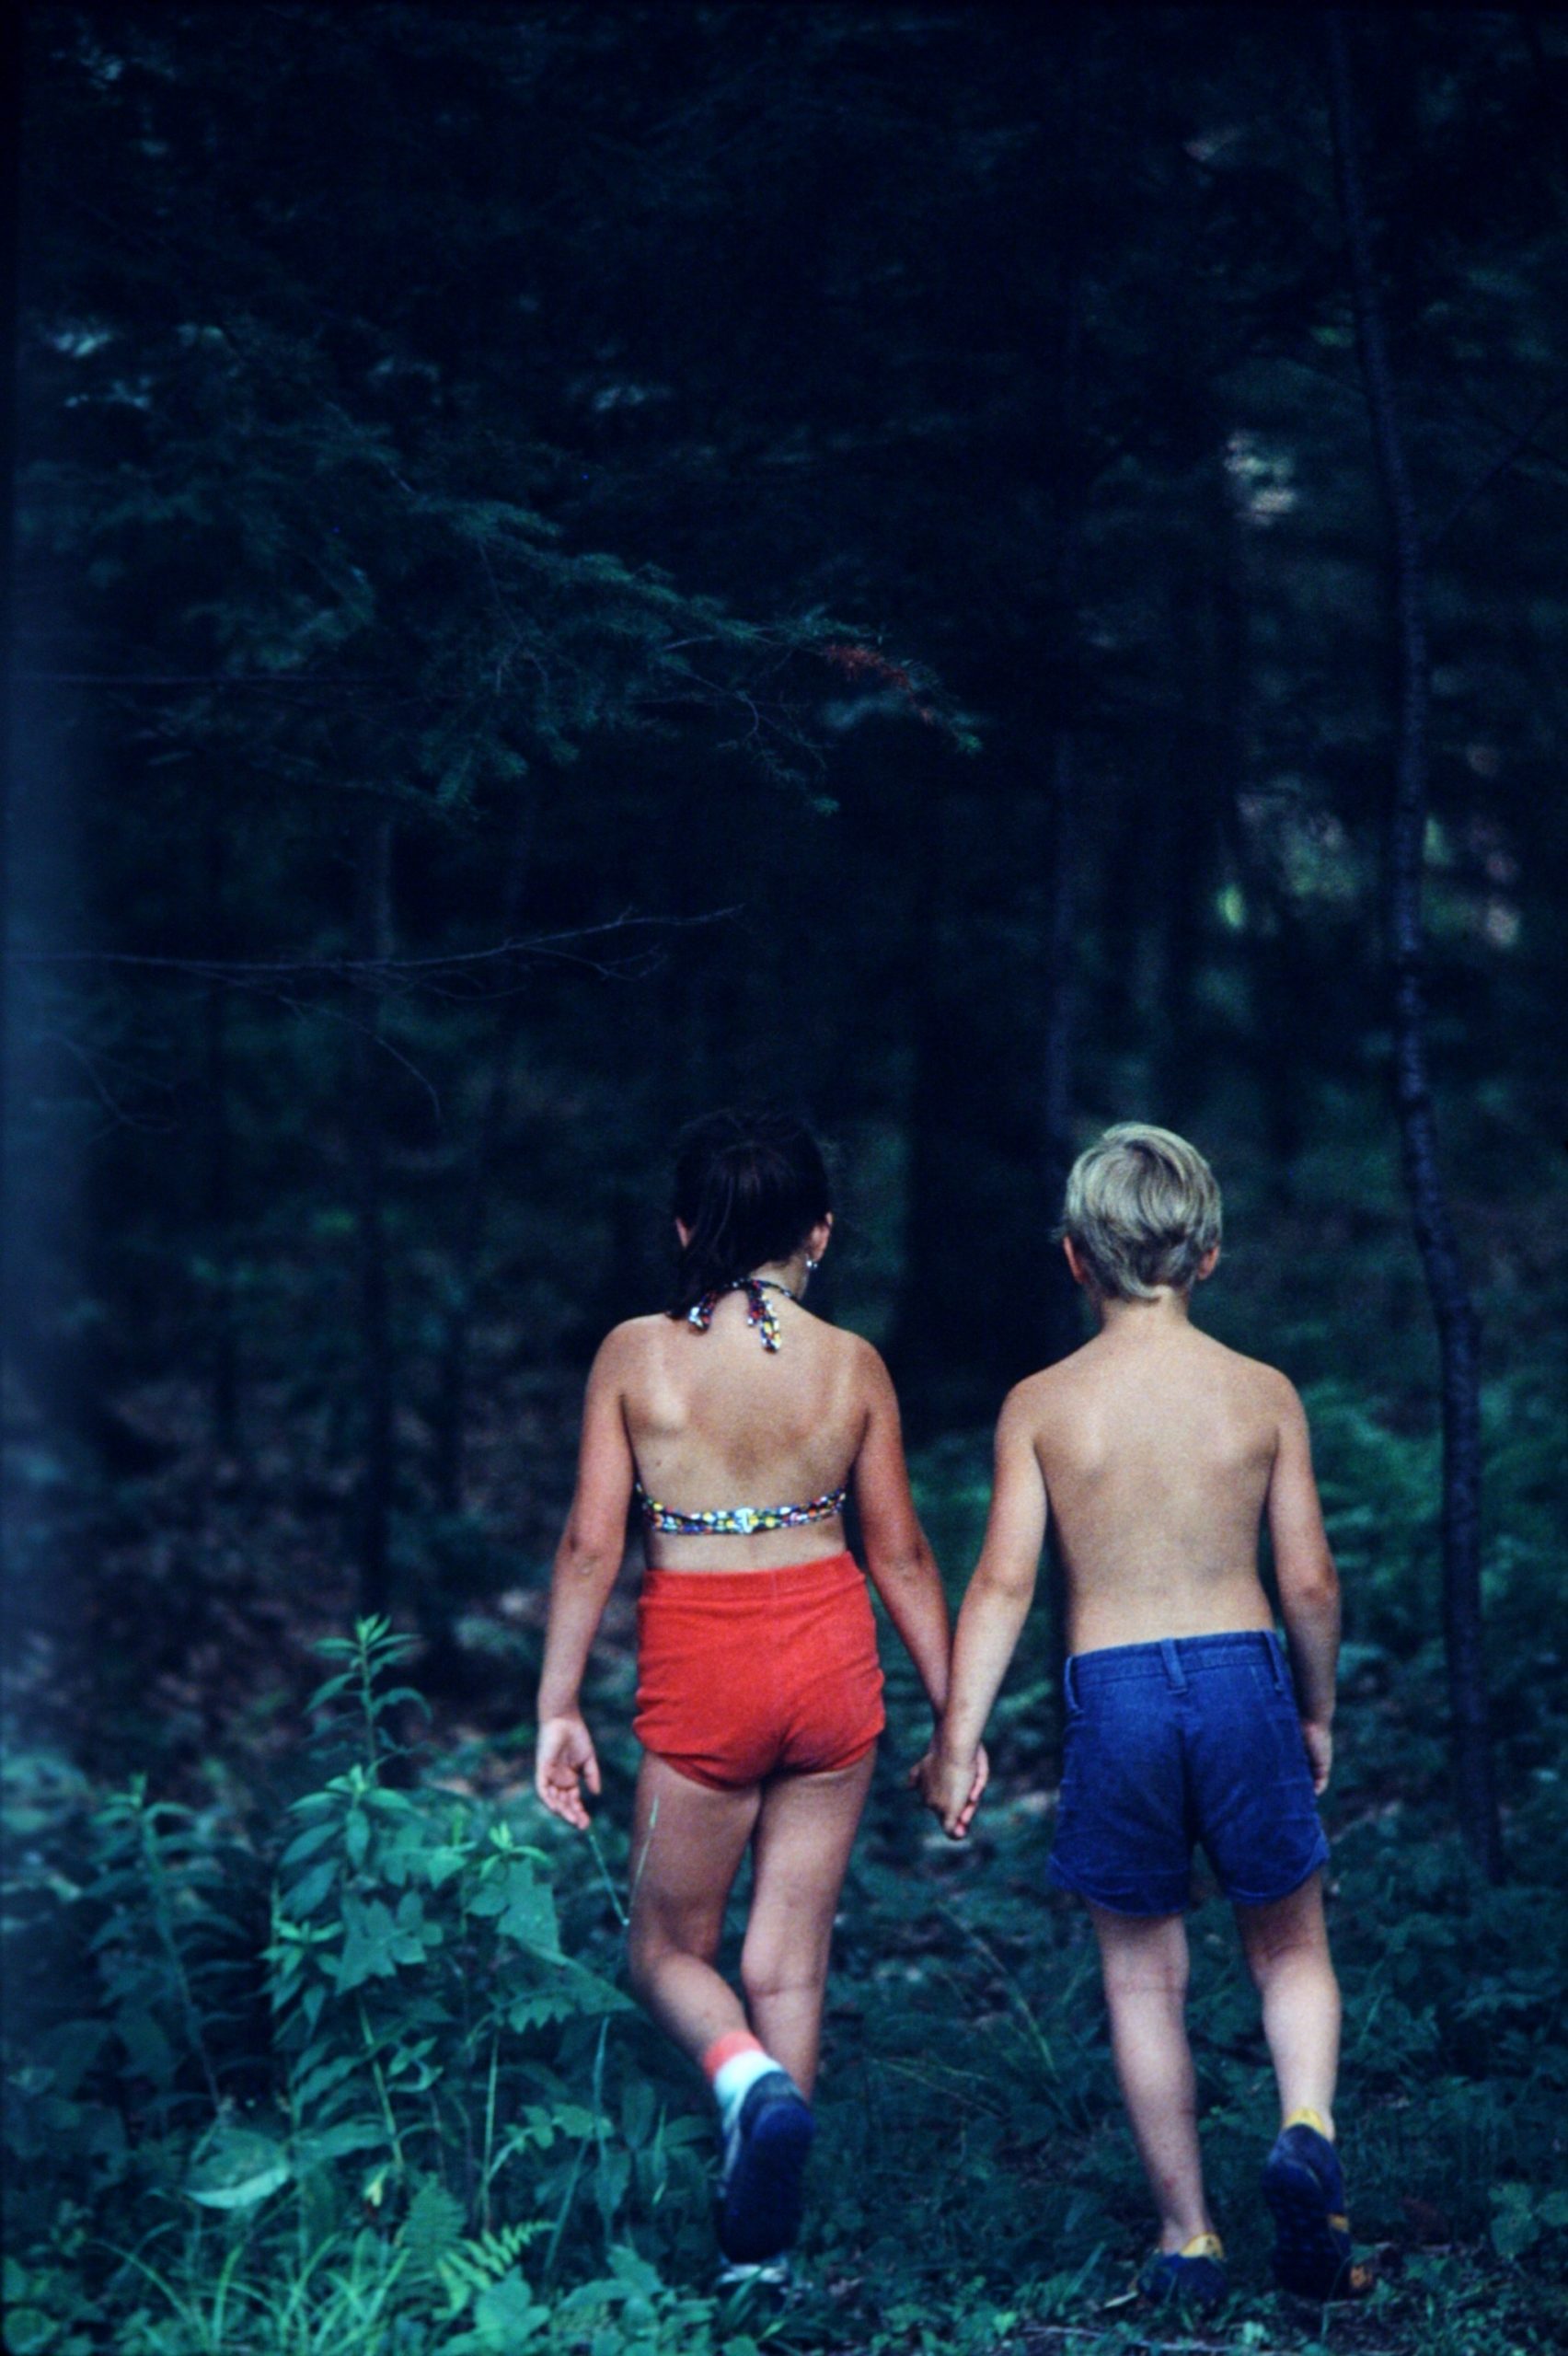 children walking in the forest